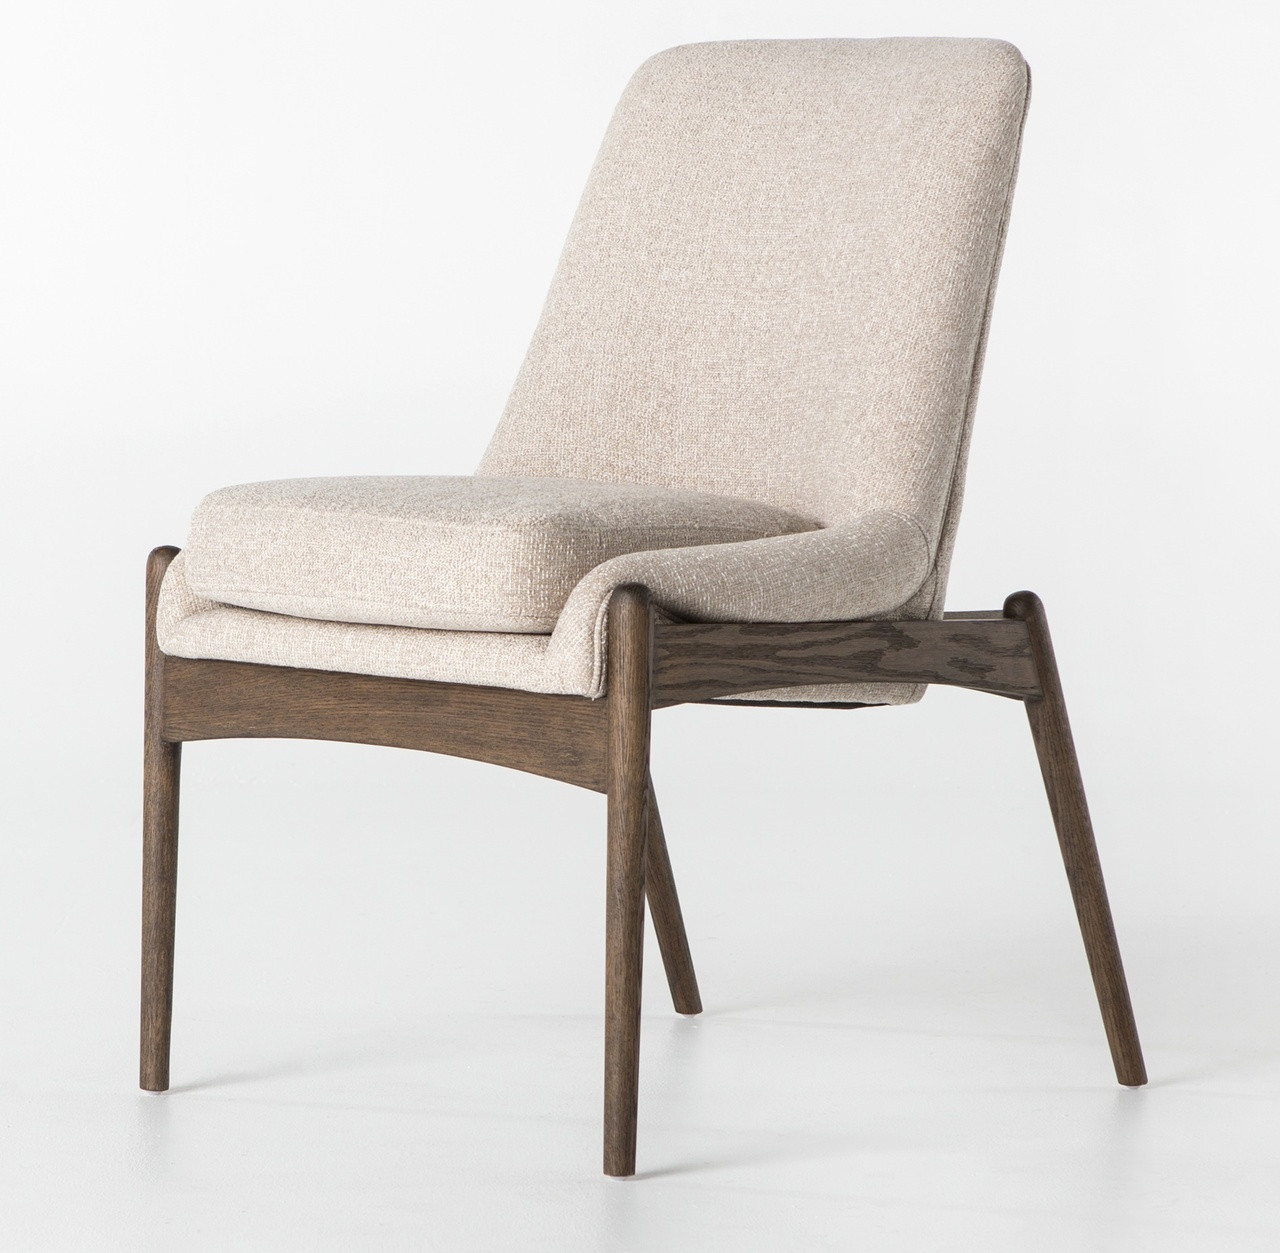 Braden Mid-Century Modern Upholstered Dining Chair | Zin Home